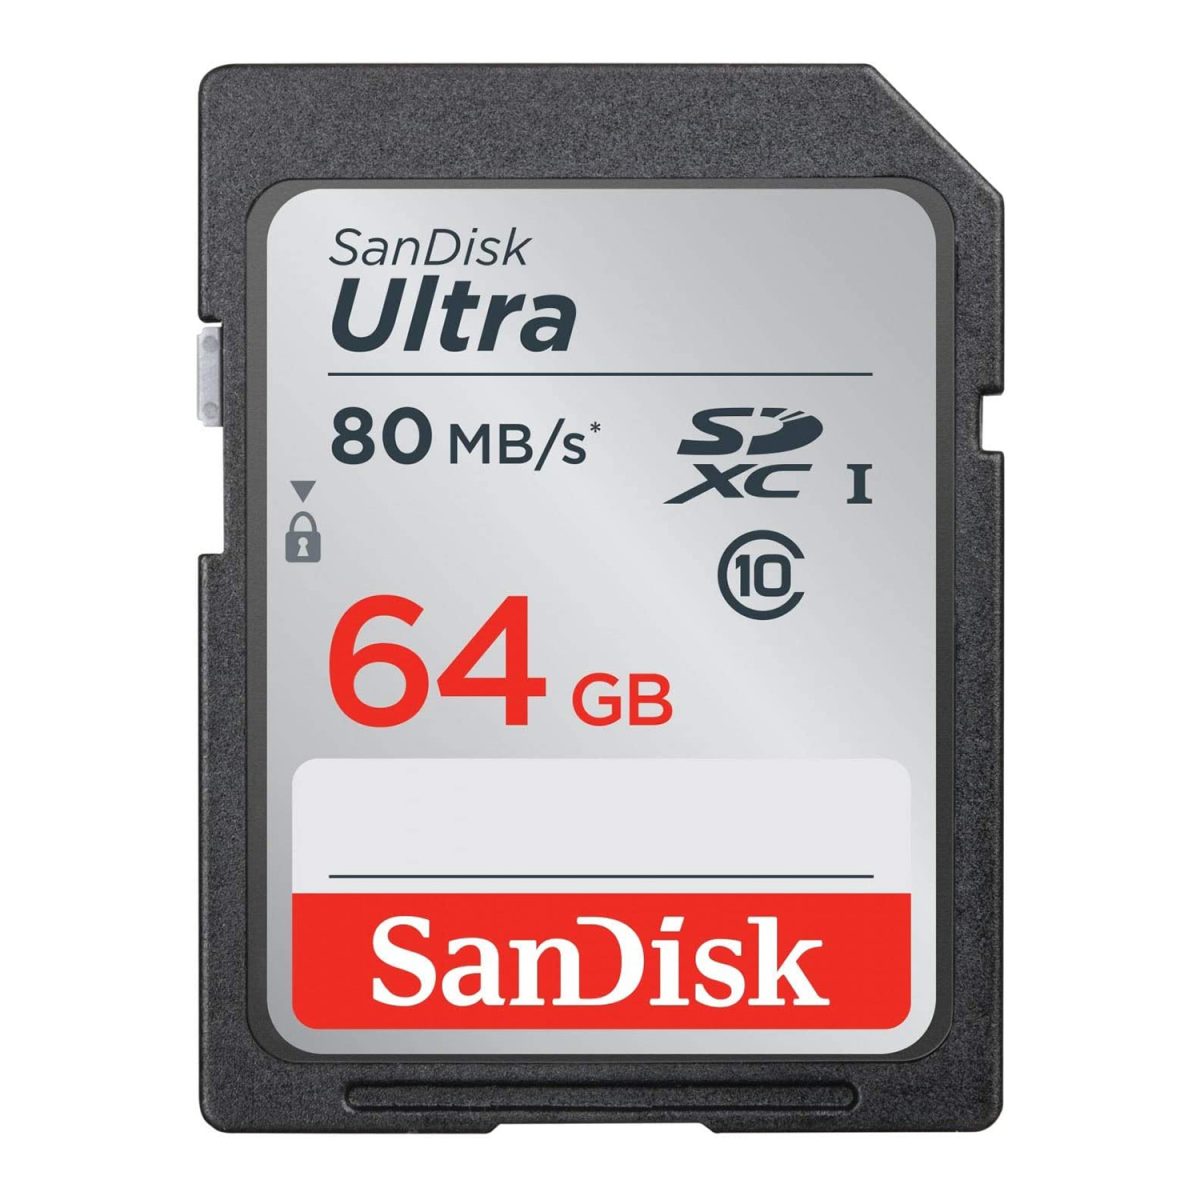 SanDisk Ultra 64GB Class 10 SDXC UHS-I Memory Card 1